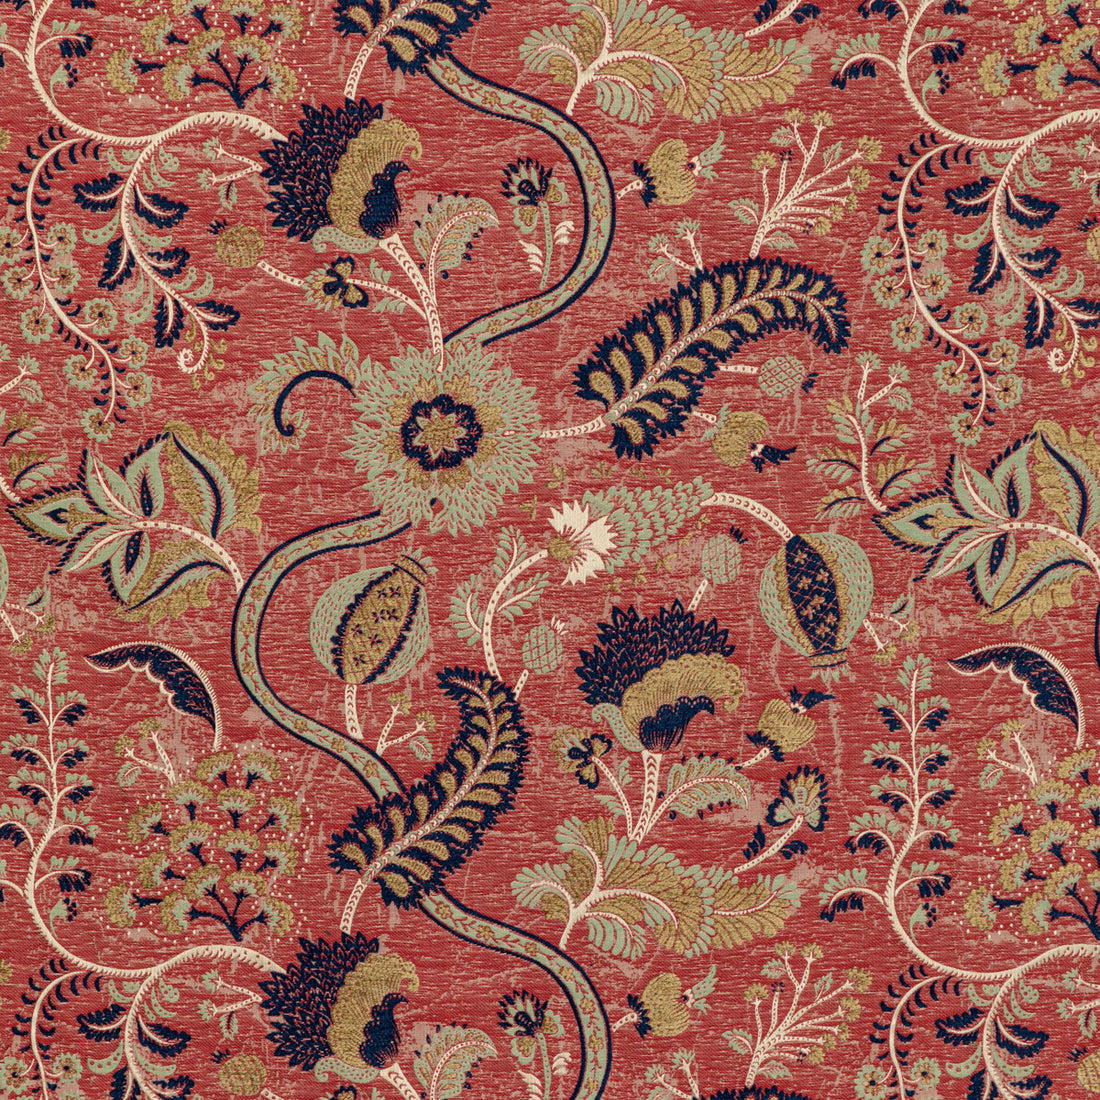 Jardin Bleu fabric in red/multi color - pattern 2020213.924.0 - by Lee Jofa in the Oscar De La Renta IV collection